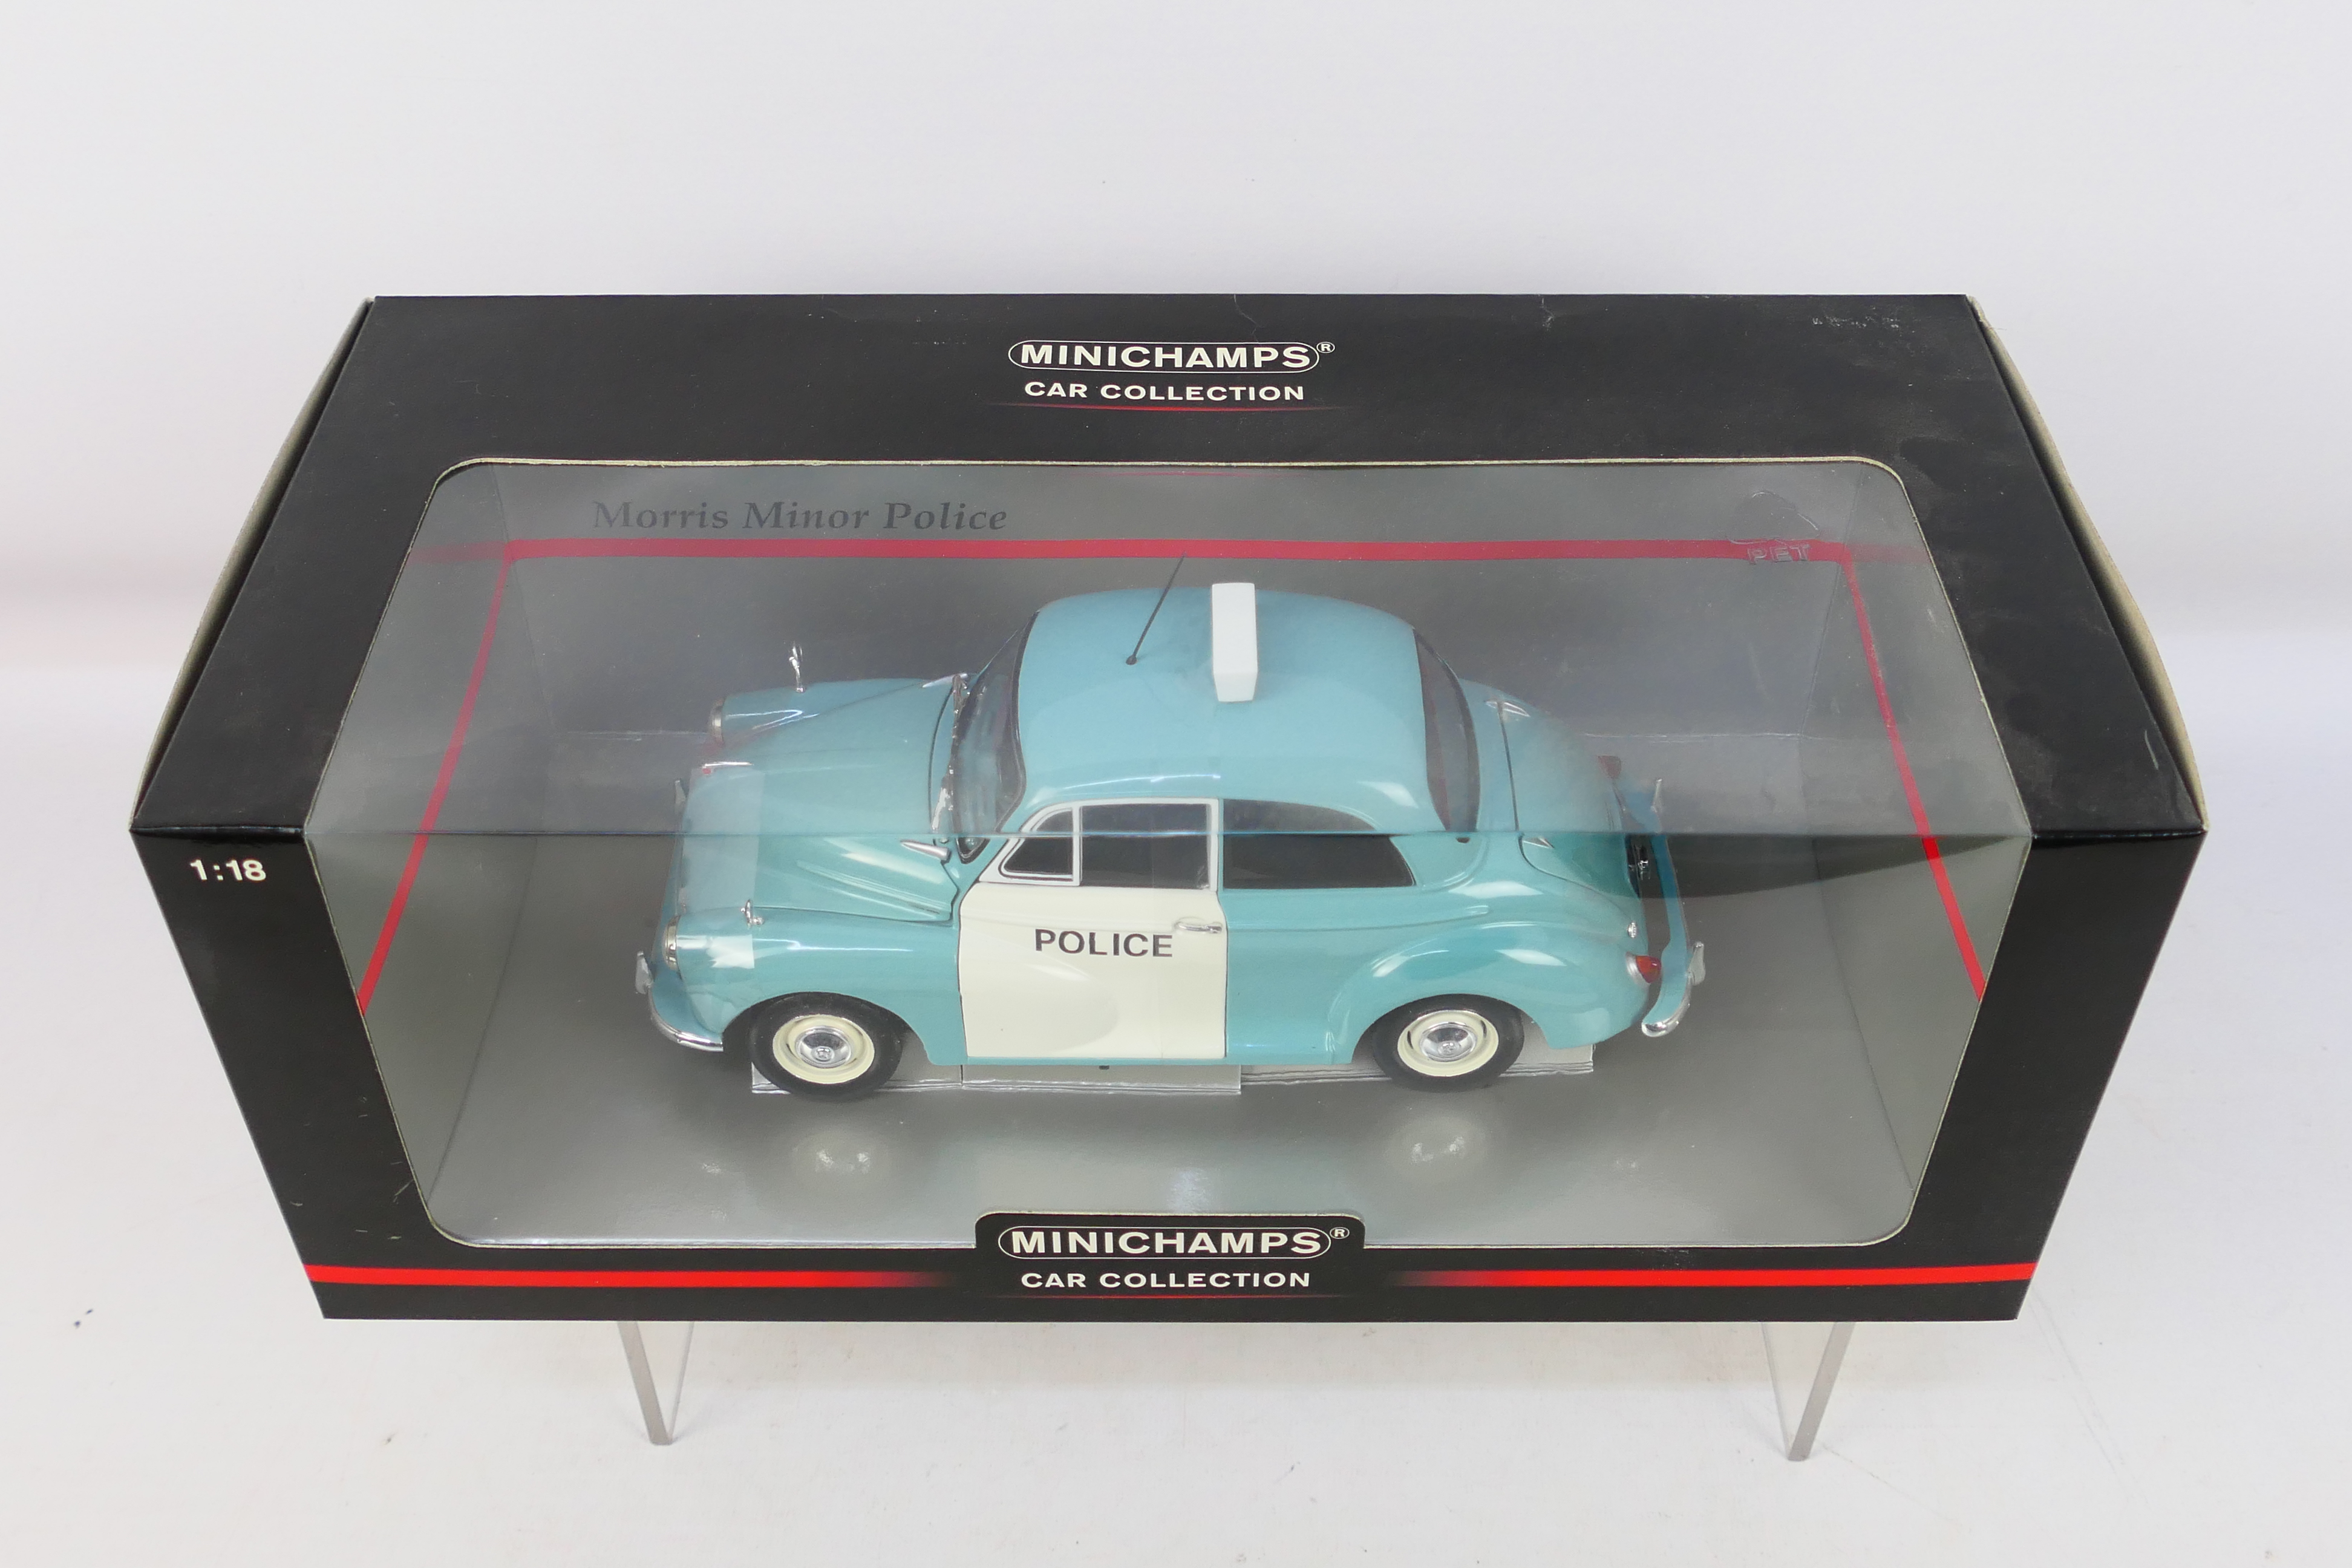 Minichamps - A boxed Minichamps #150137090 1:18 scale Morris Minor Police Car. - Image 3 of 3